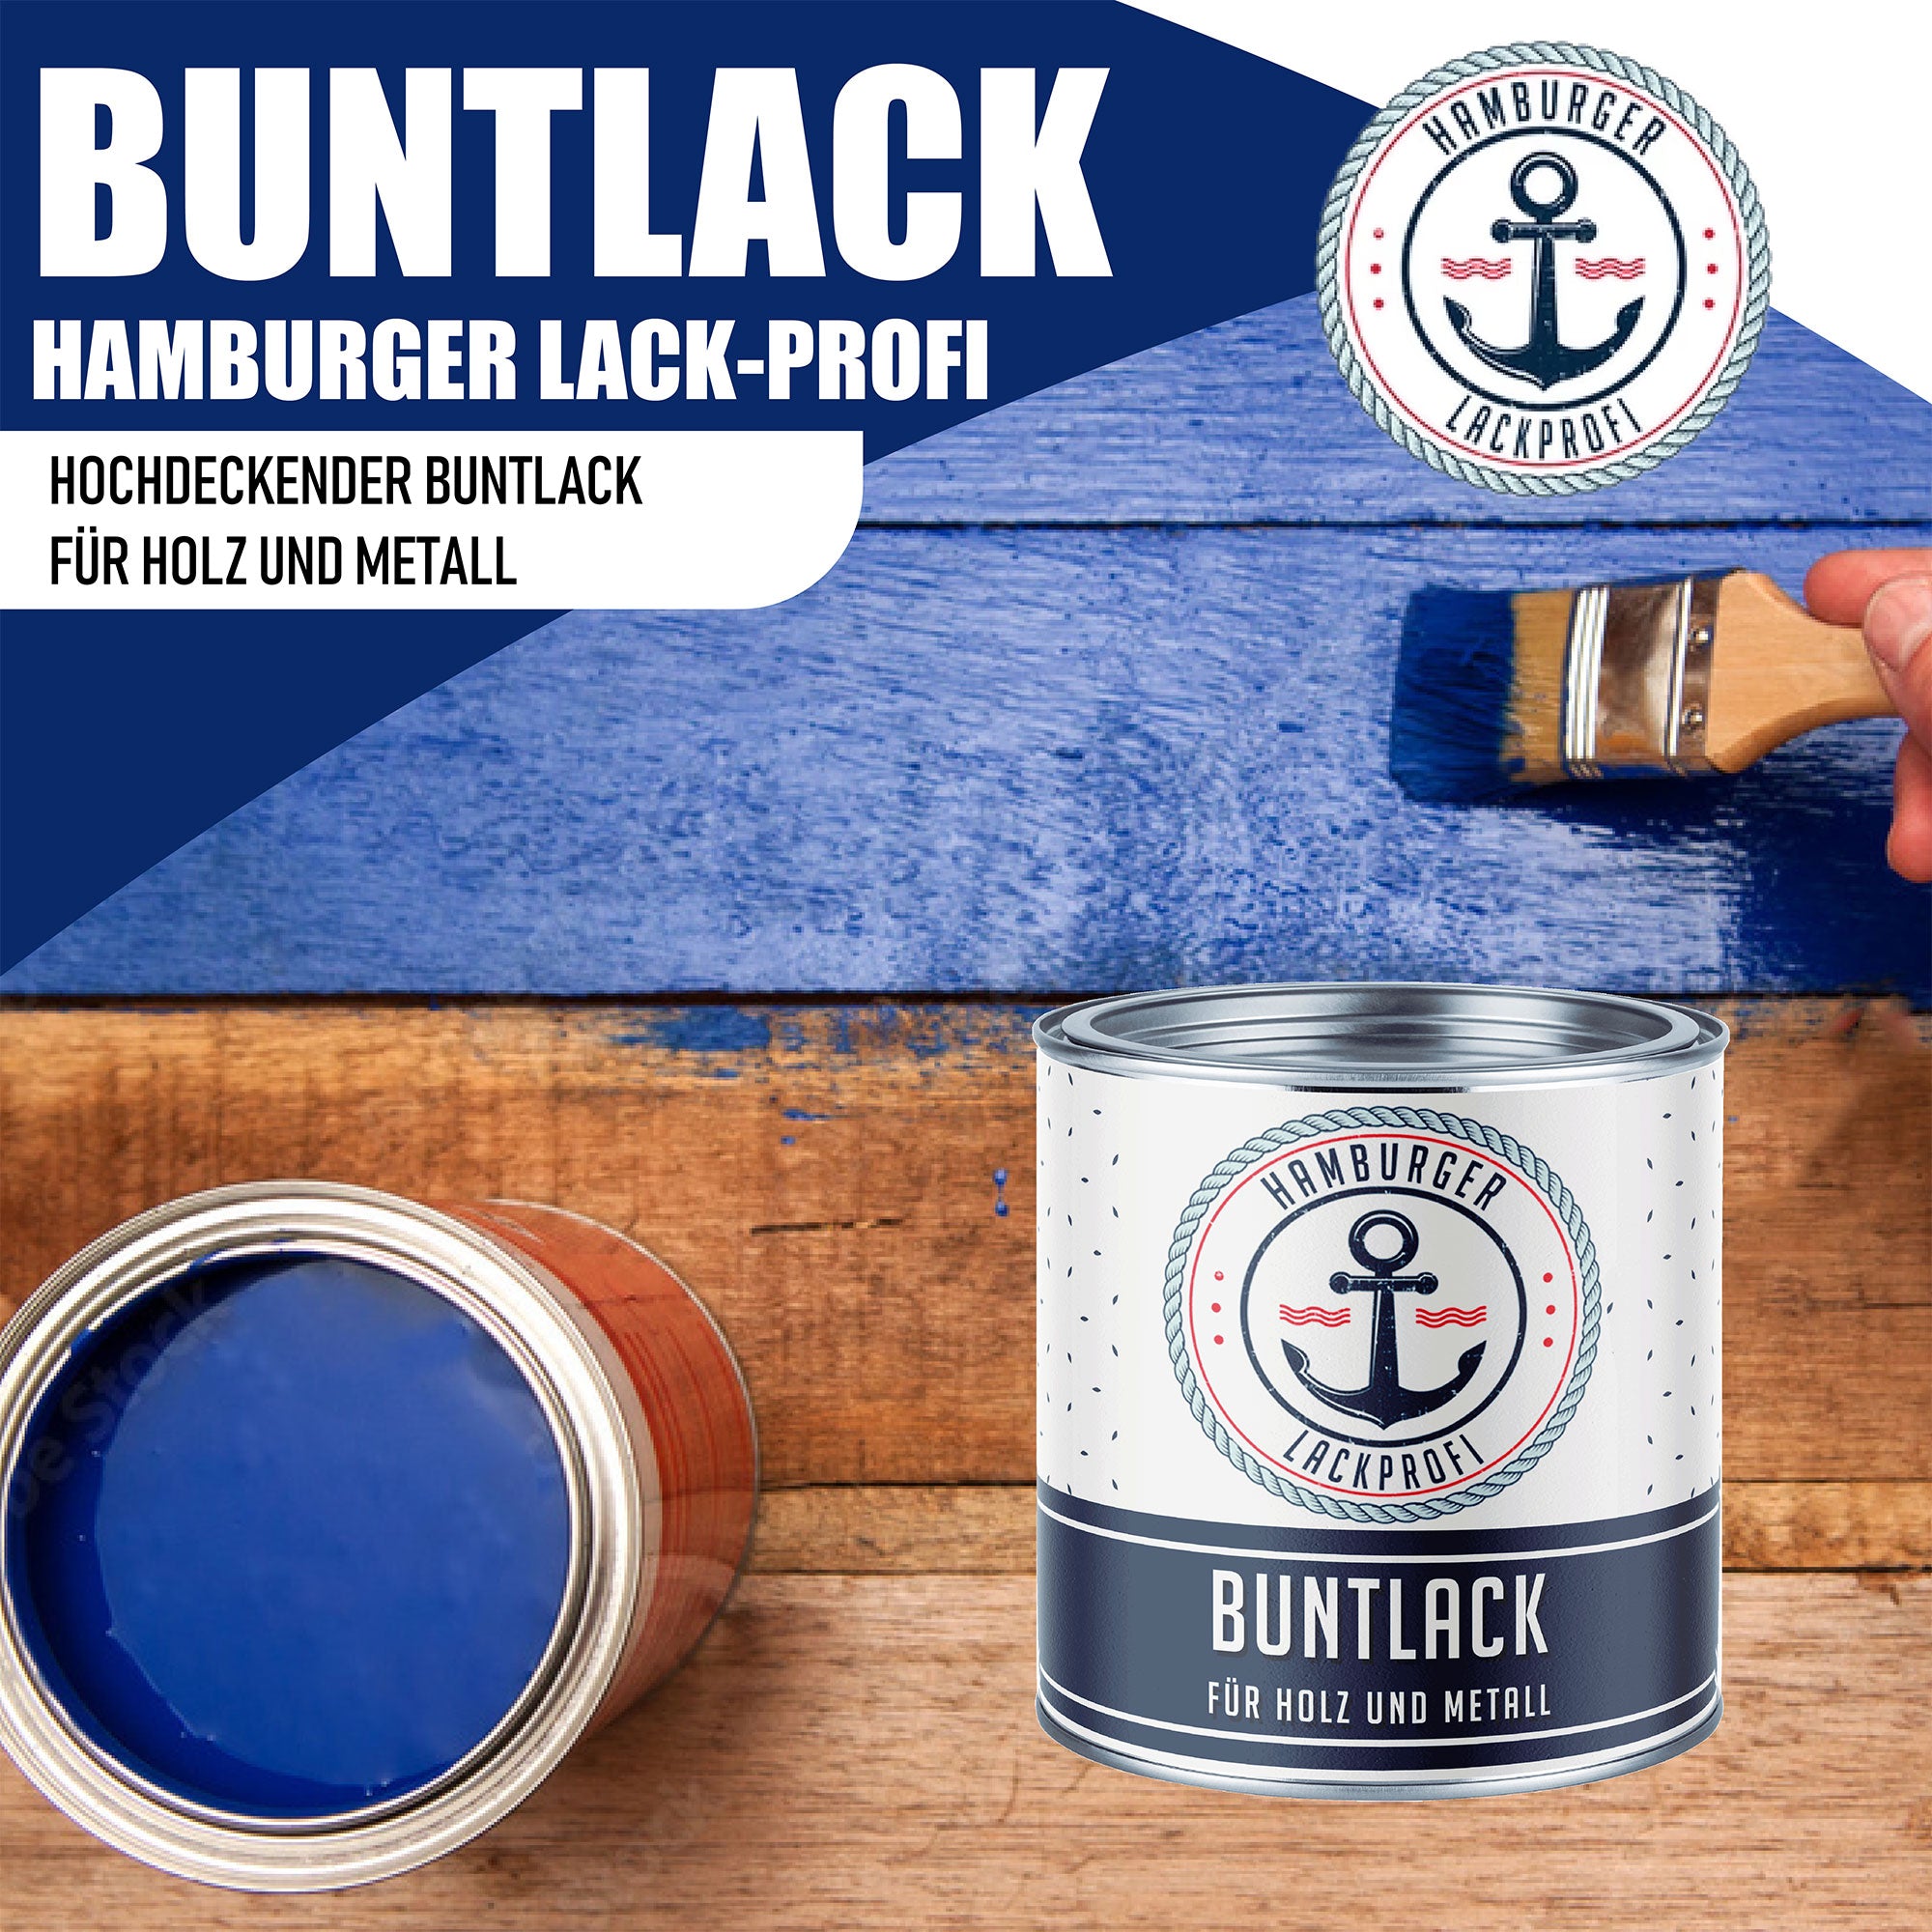 Hamburger Lack-Profi Buntlack in Dahliengelb RAL 1033 mit Lackierset (X300) & Verdünnung (1 L) - 30% Sparangebot